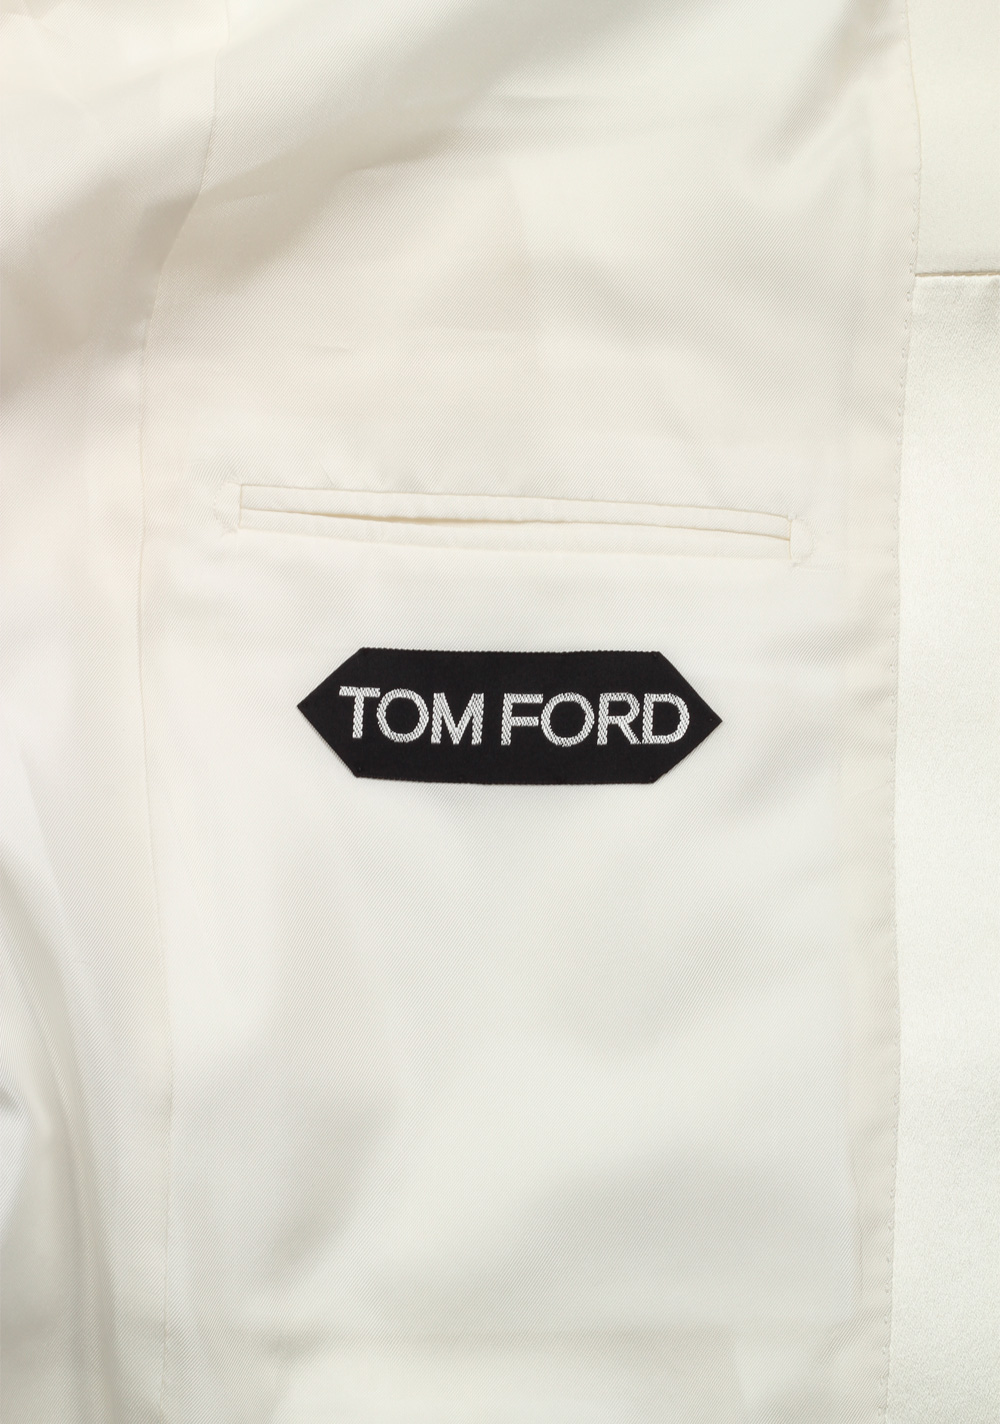 TOM FORD Shelton White Shawl Collar Sport Coat Tuxedo Dinner Jacket Size 48 / 38R U.S. | Costume Limité